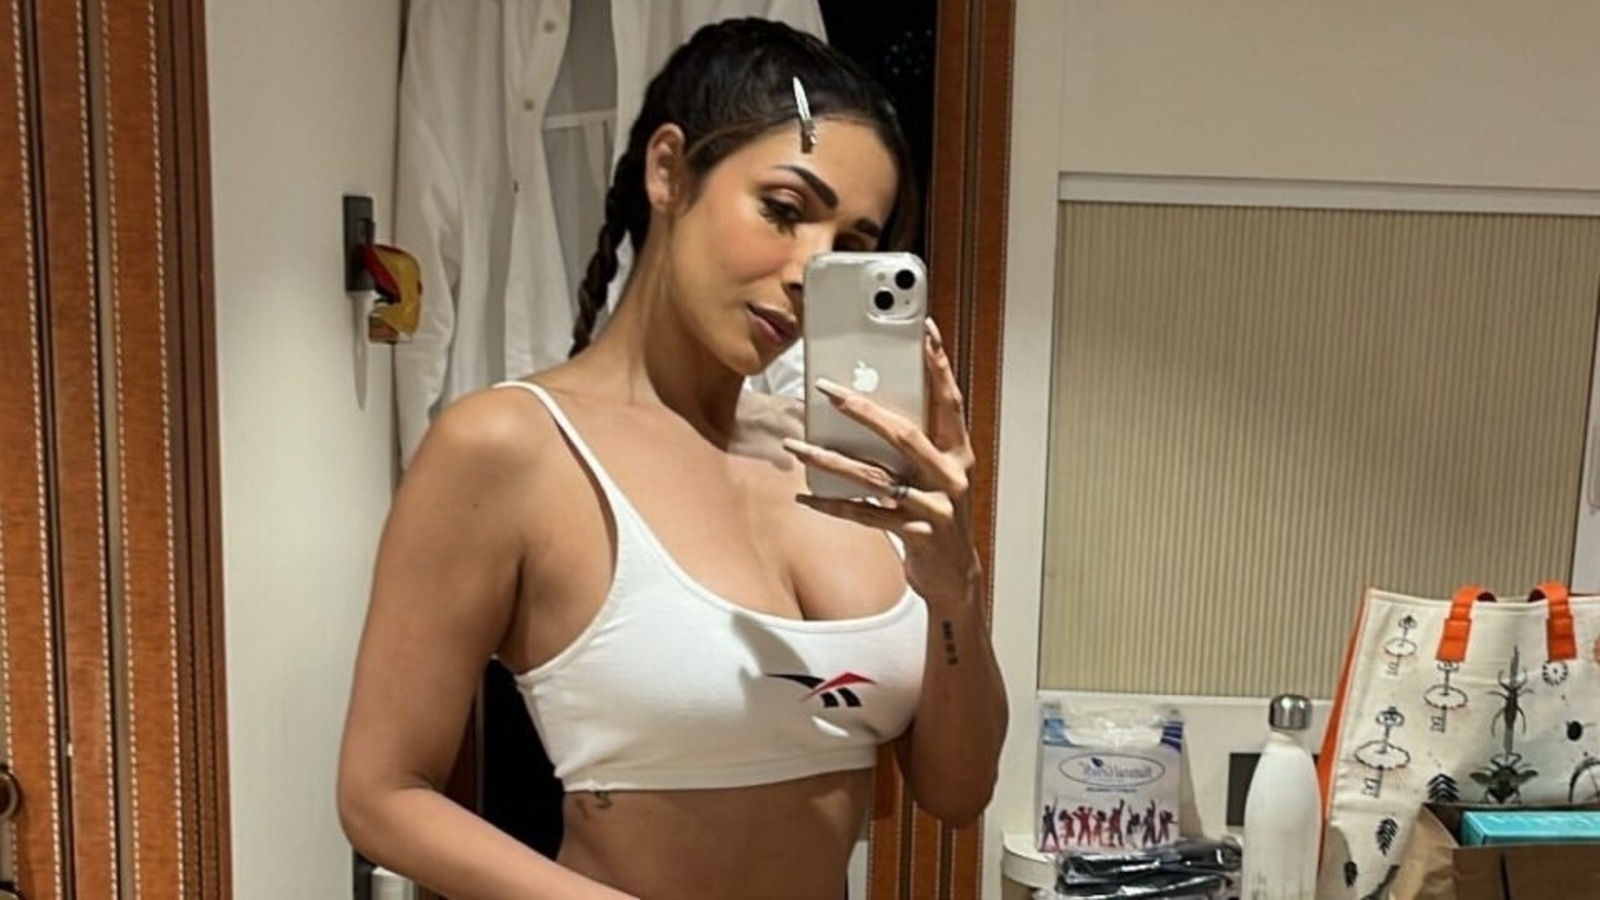 Malaika Arora drops the perfect mirror selfie in white sports bra